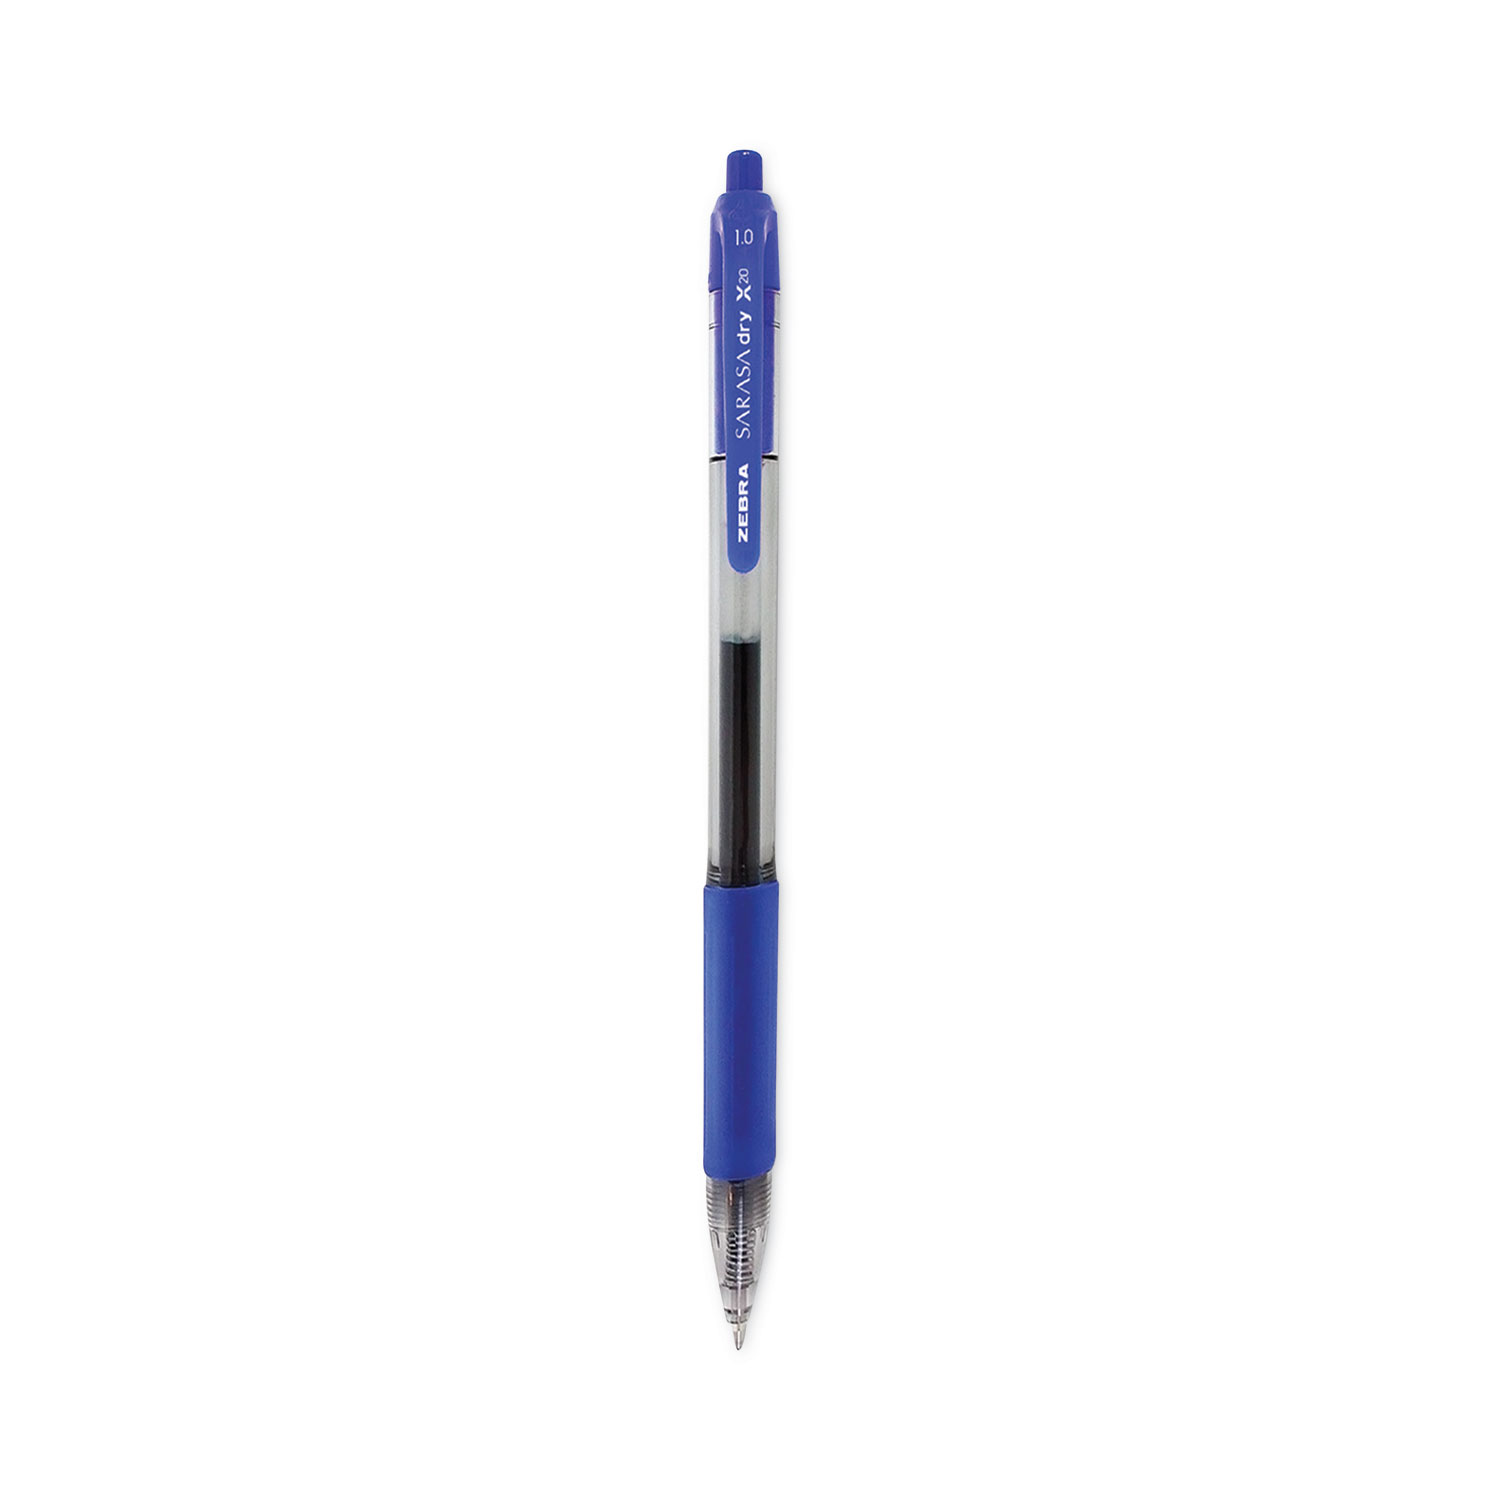 ZEB46810 - Zebra SARASA dry X20 Retractable Gel Pen - Medium Pen